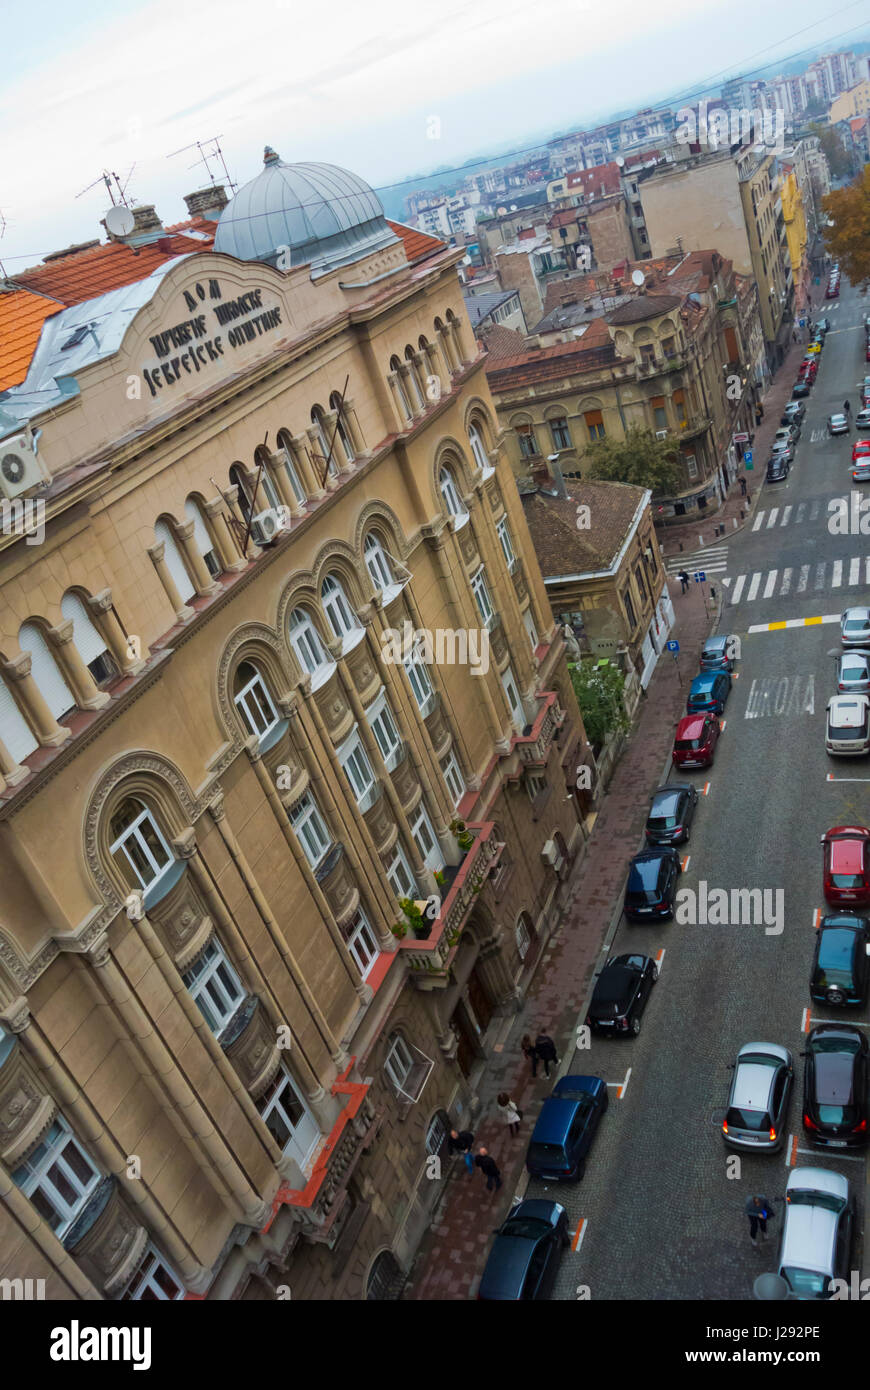 Kralja Petra, King Peter street, Dorcol district, Stari Grad, central Belgrade, Serbia Stock Photo